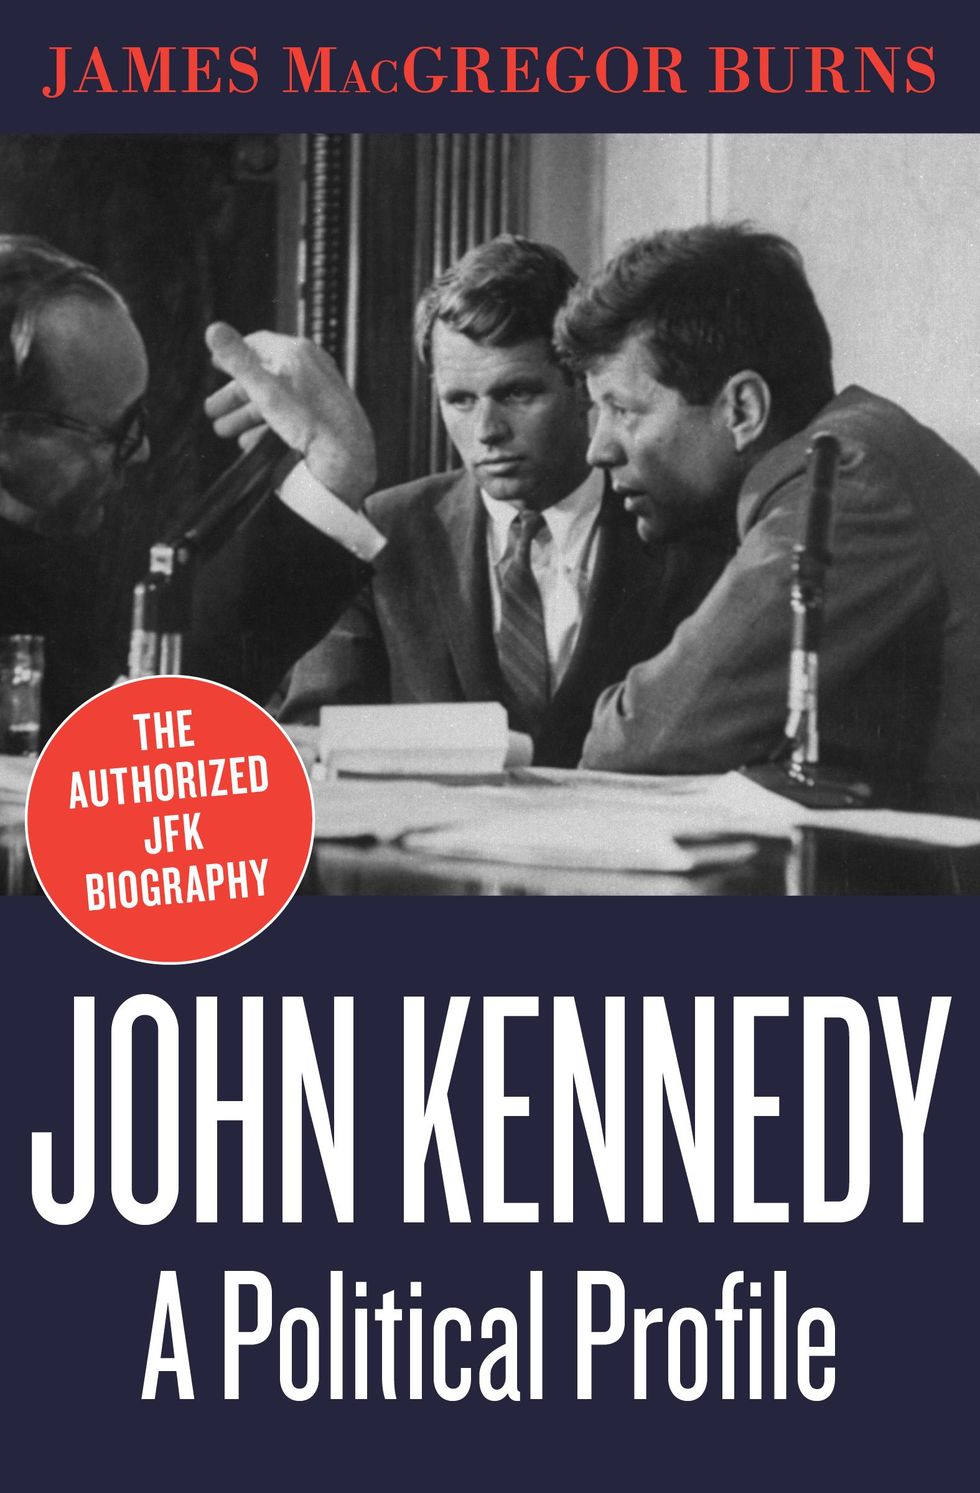 John Kennedy: A Political Profile